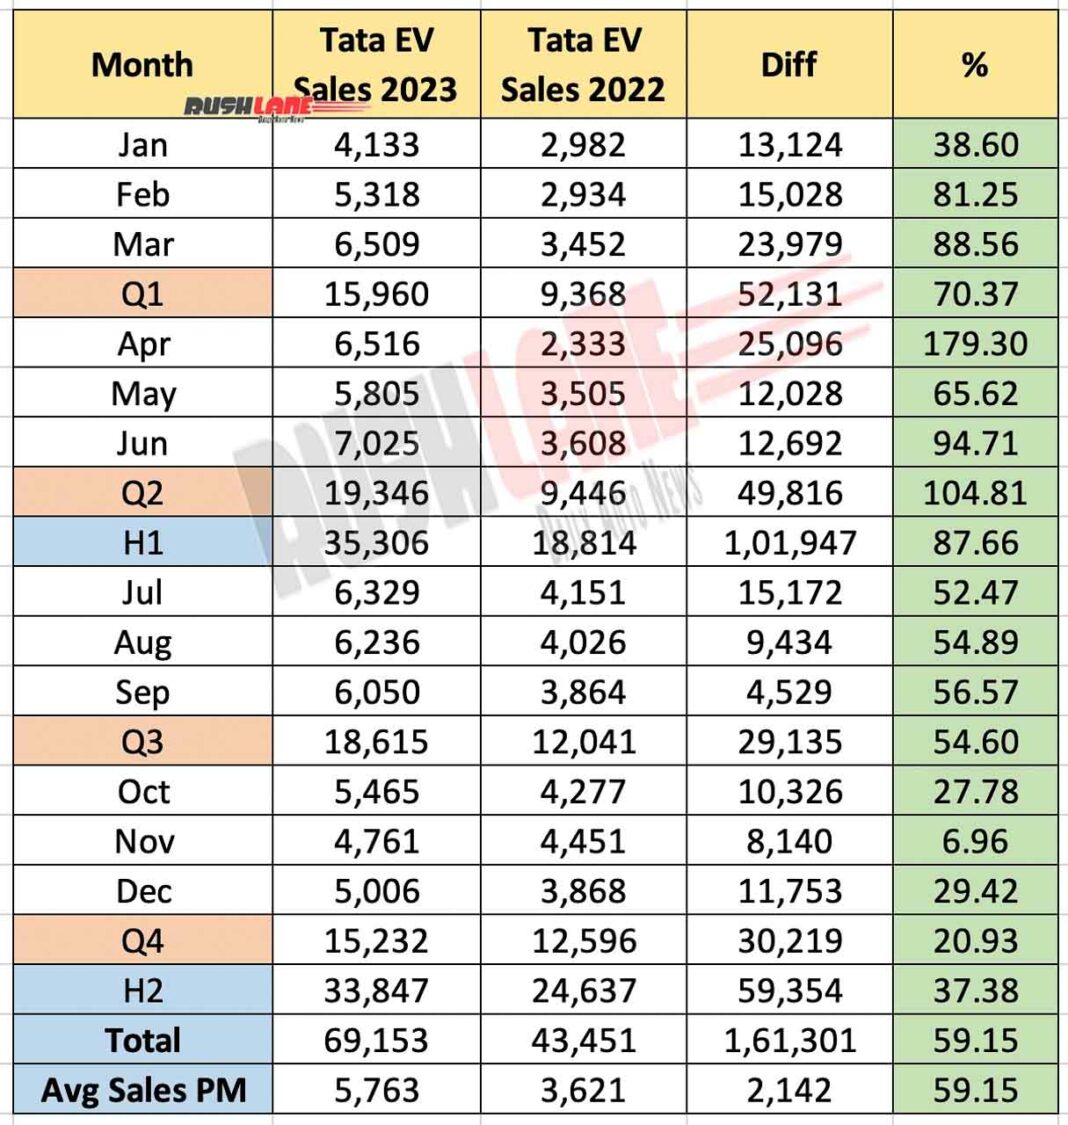 Mercedes Benz India Sales - 2023 records highest ever